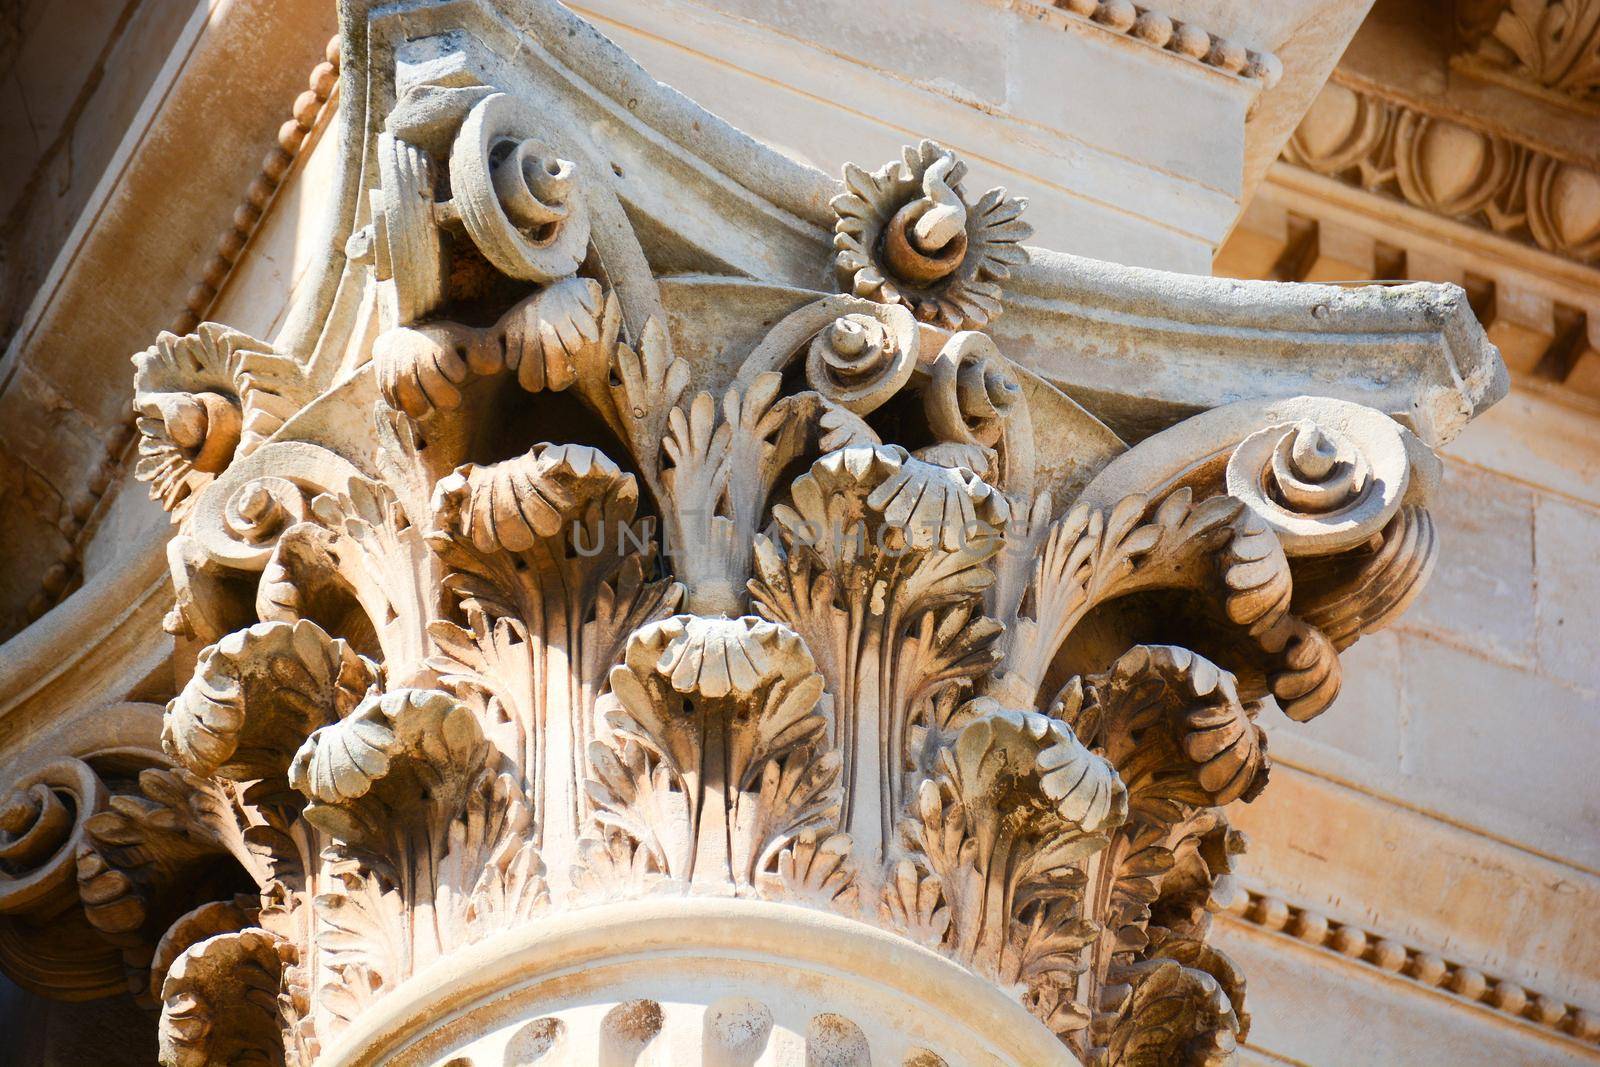 unique details of architectural treasures in Italy corinthian capital